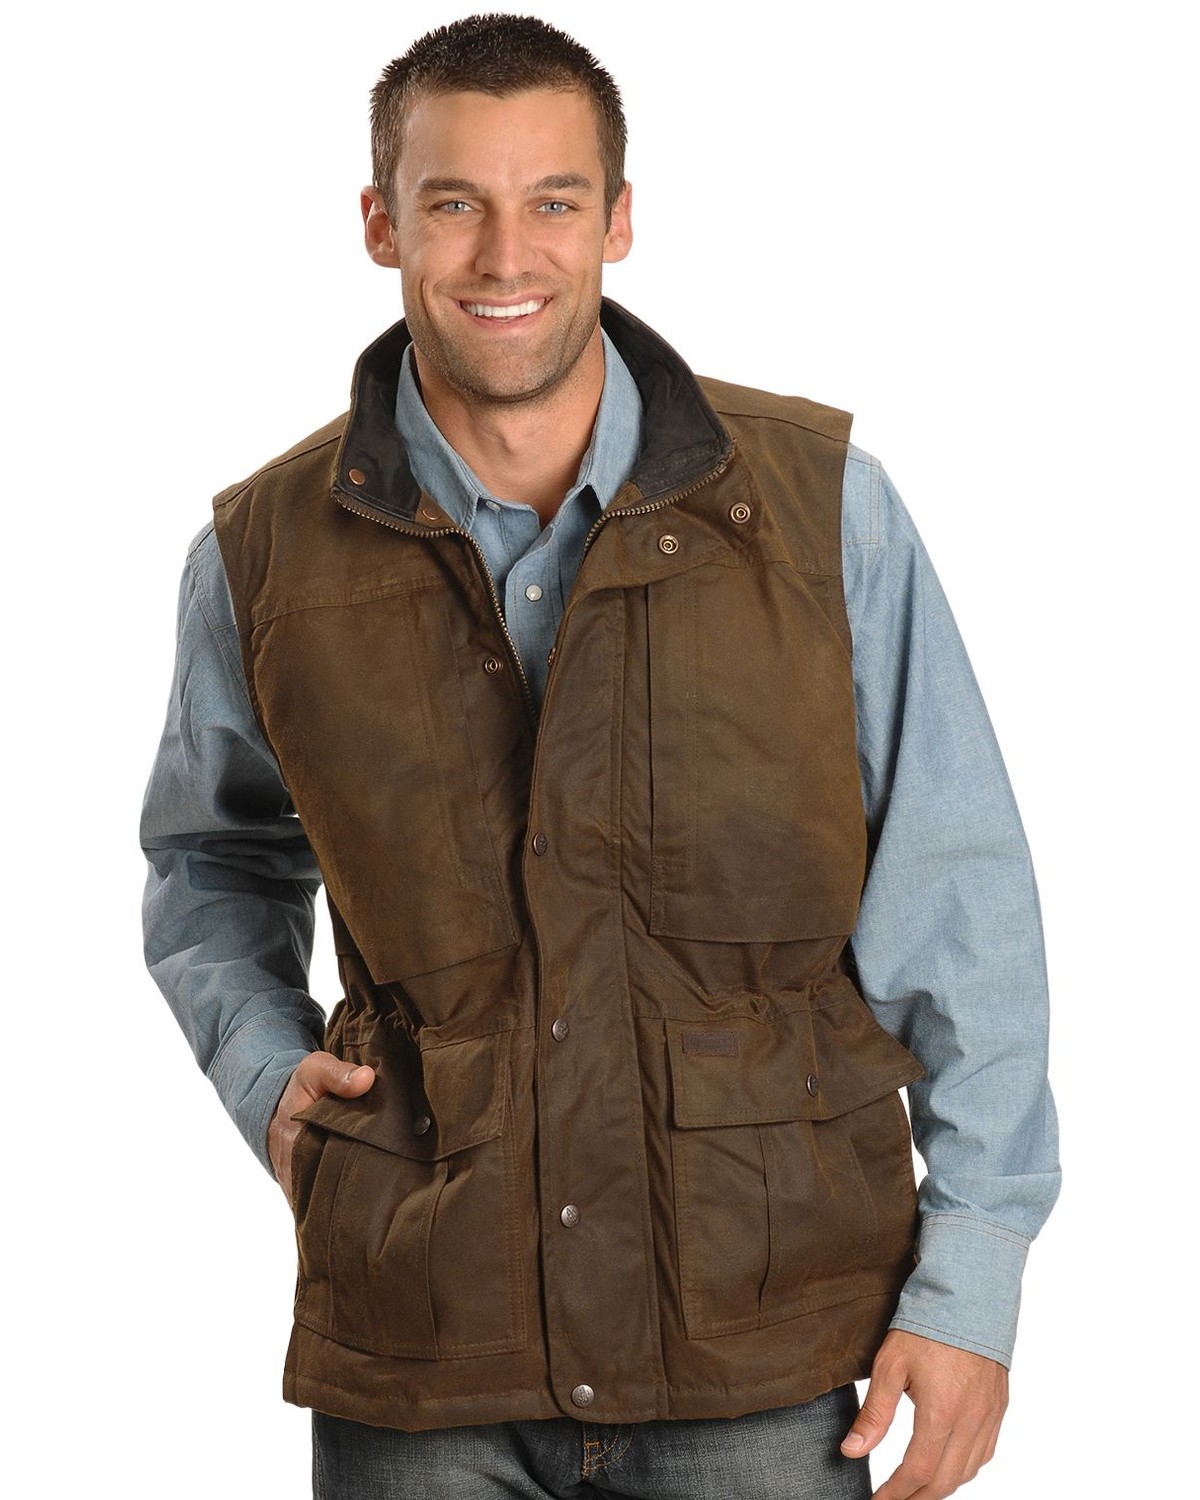 Men's Concealed Carry Jackets